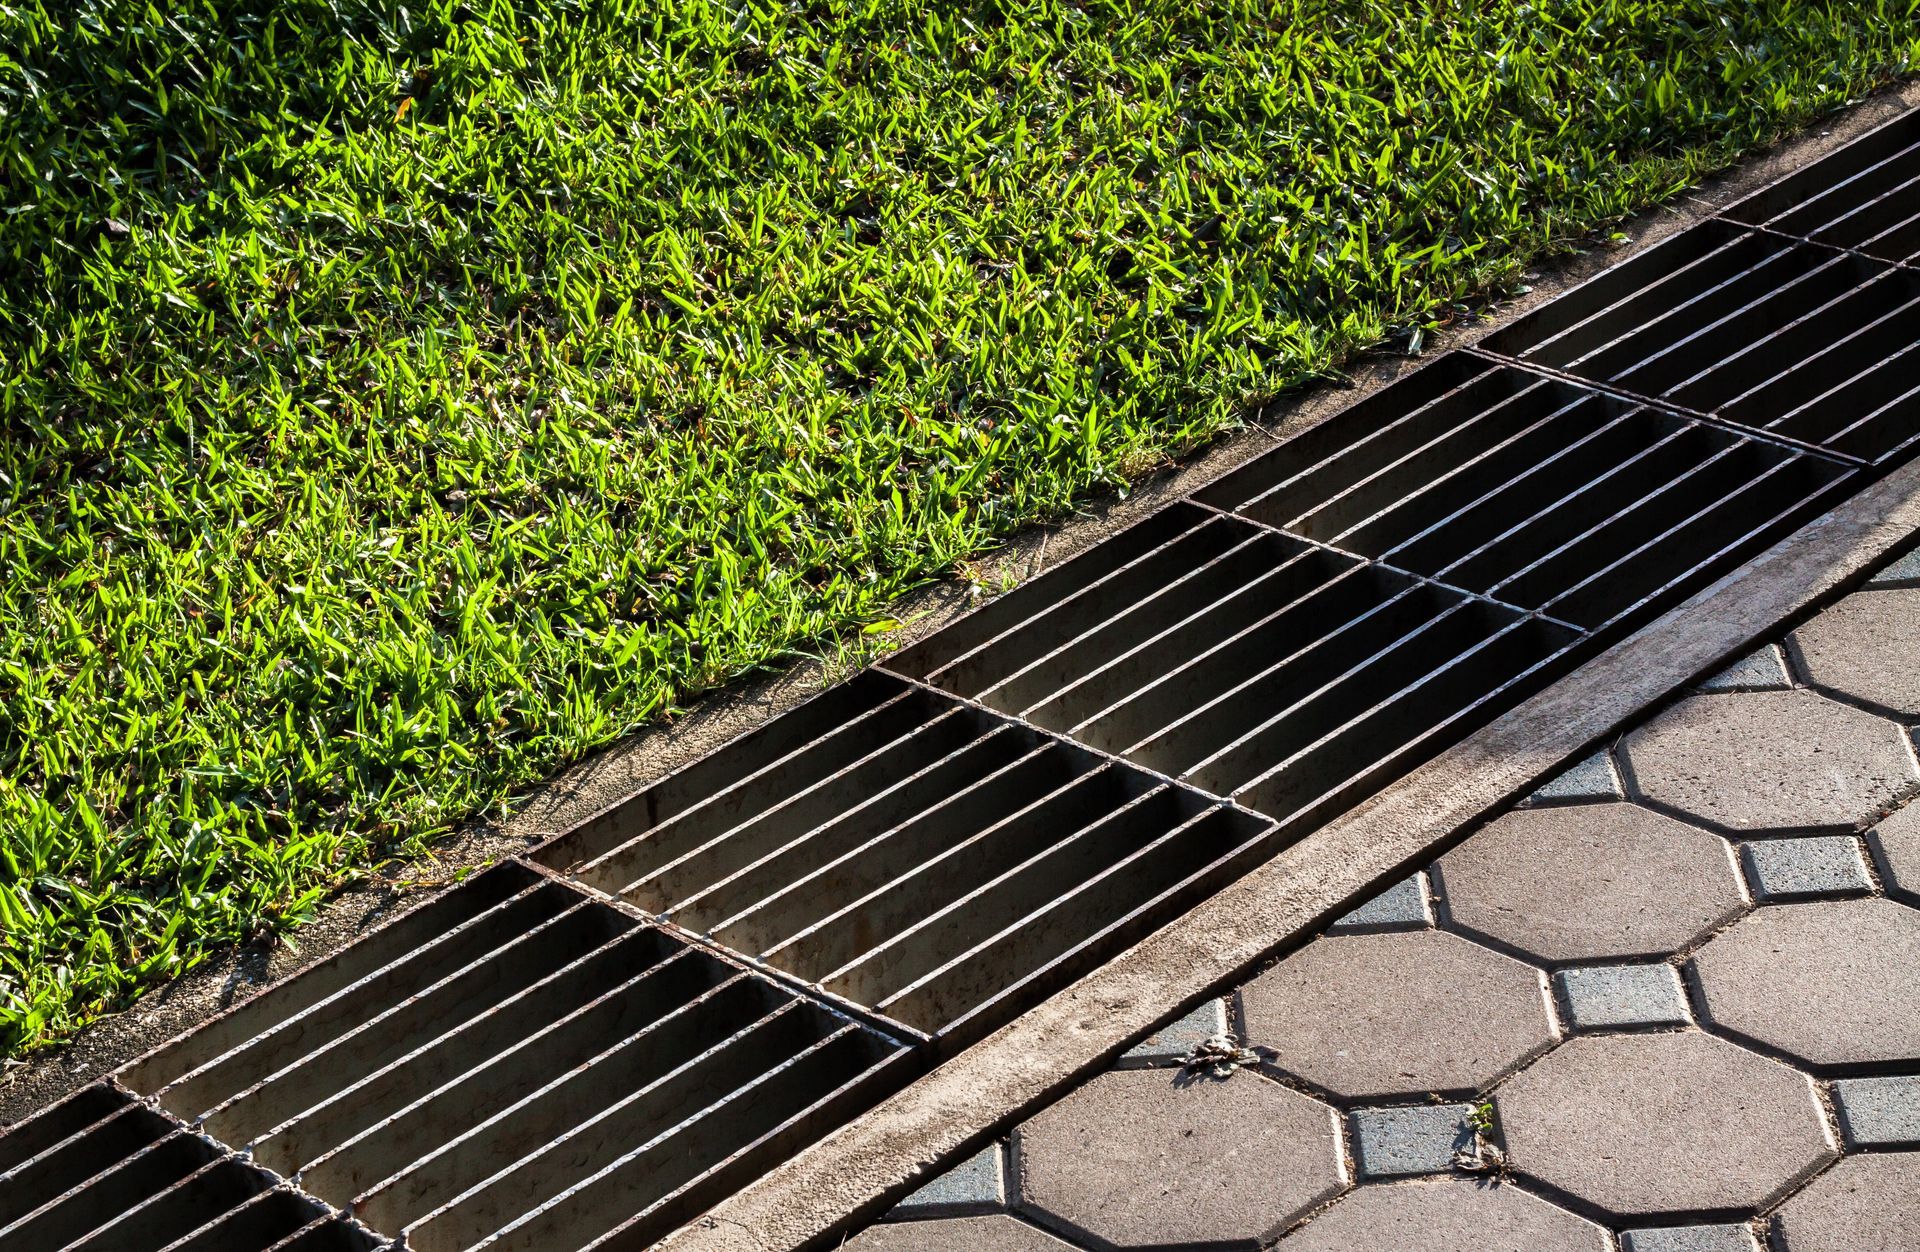 A metal drain on a sidewalk next to a grassy area.